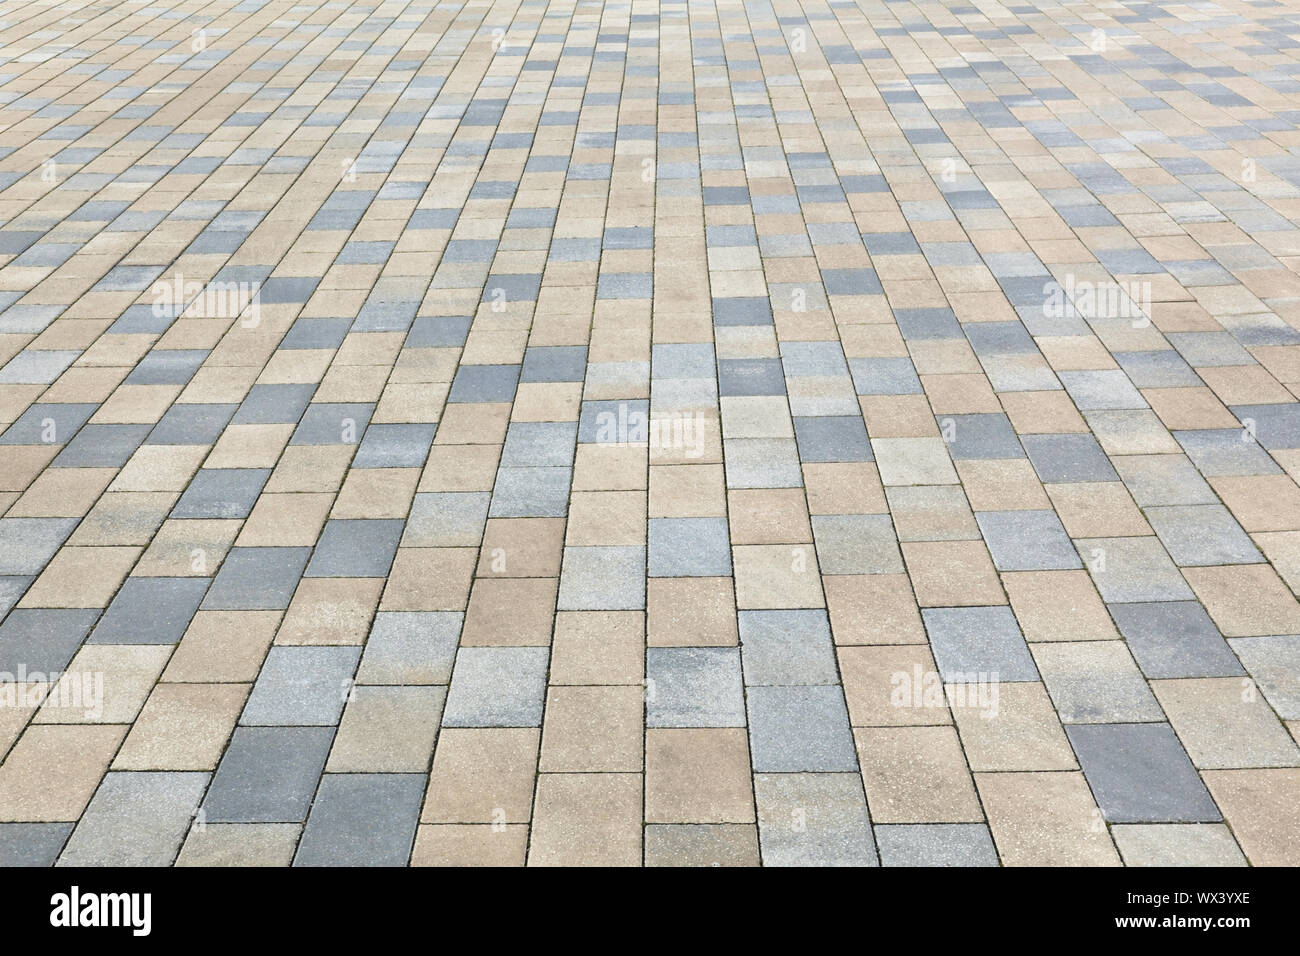 Perfect patio tiles Stock Photo